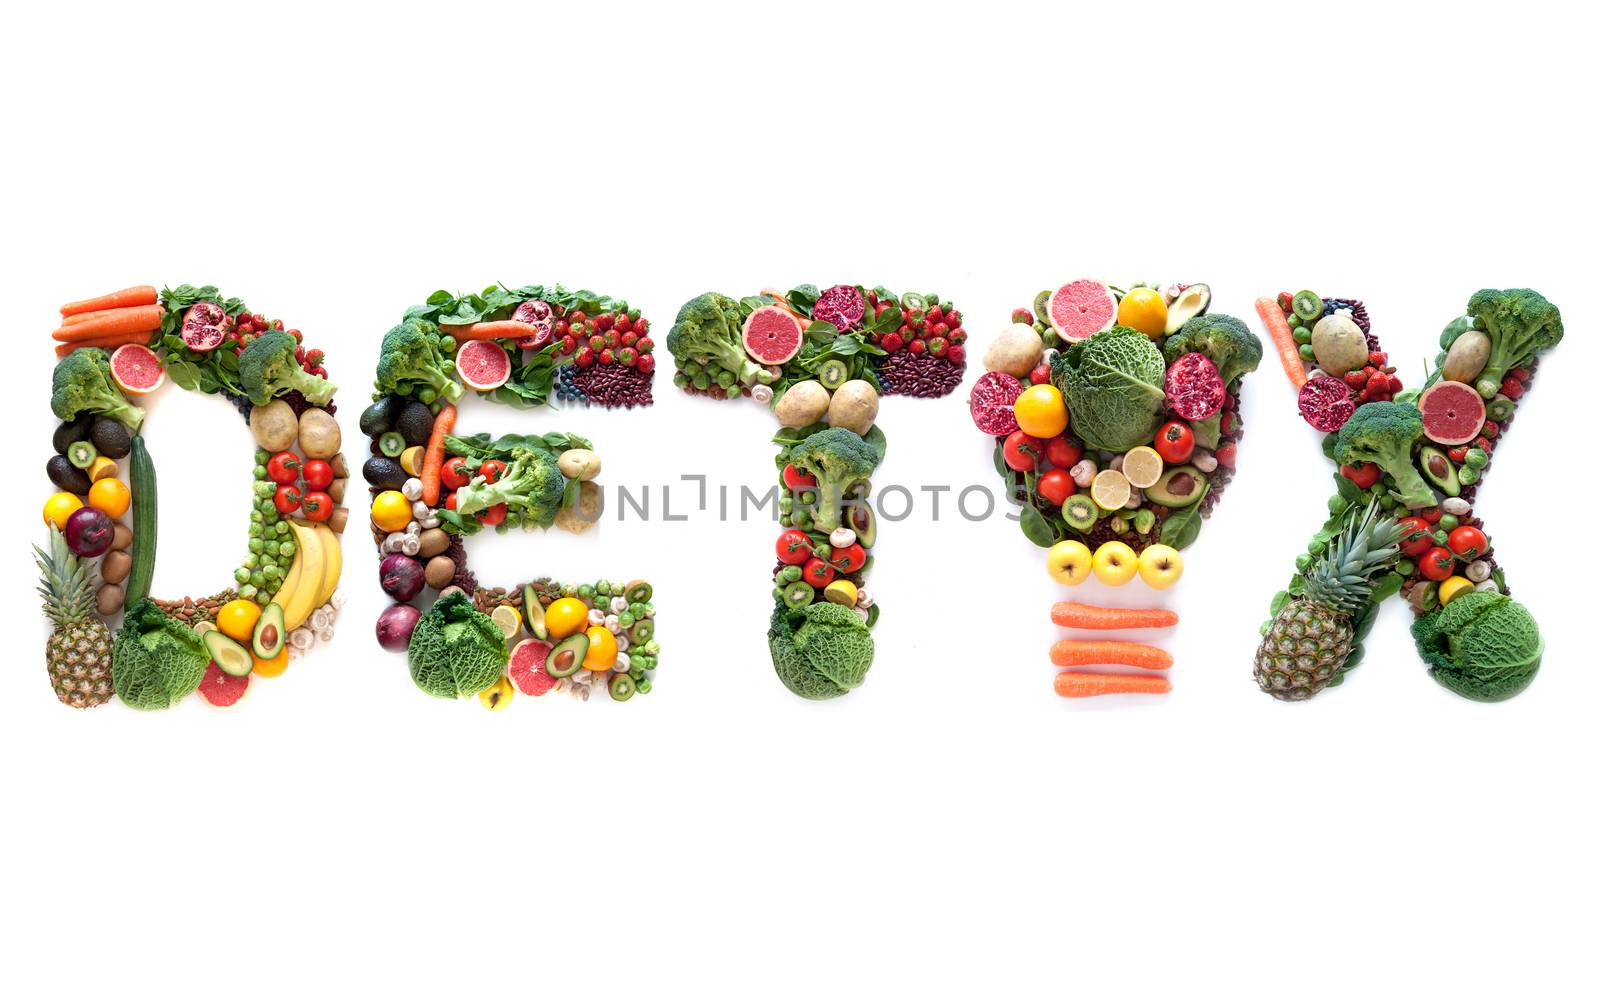 Detox spelt using large letters made of fruits and vegetables including a light bulb symbol